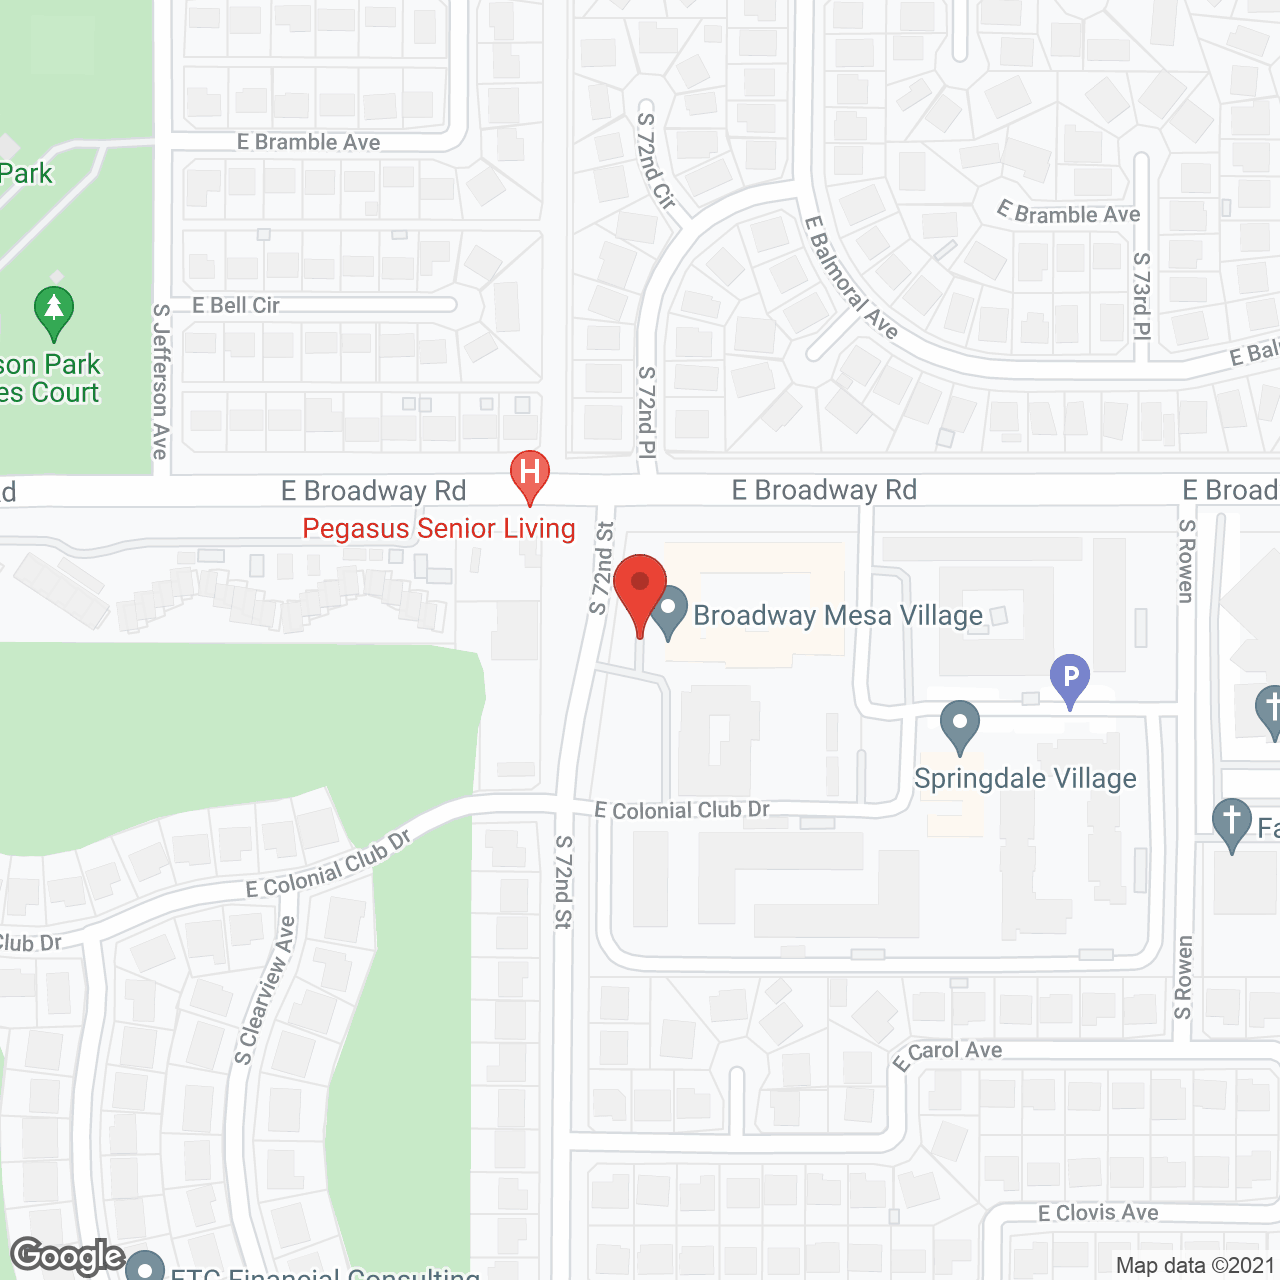 Broadway Mesa Village in google map